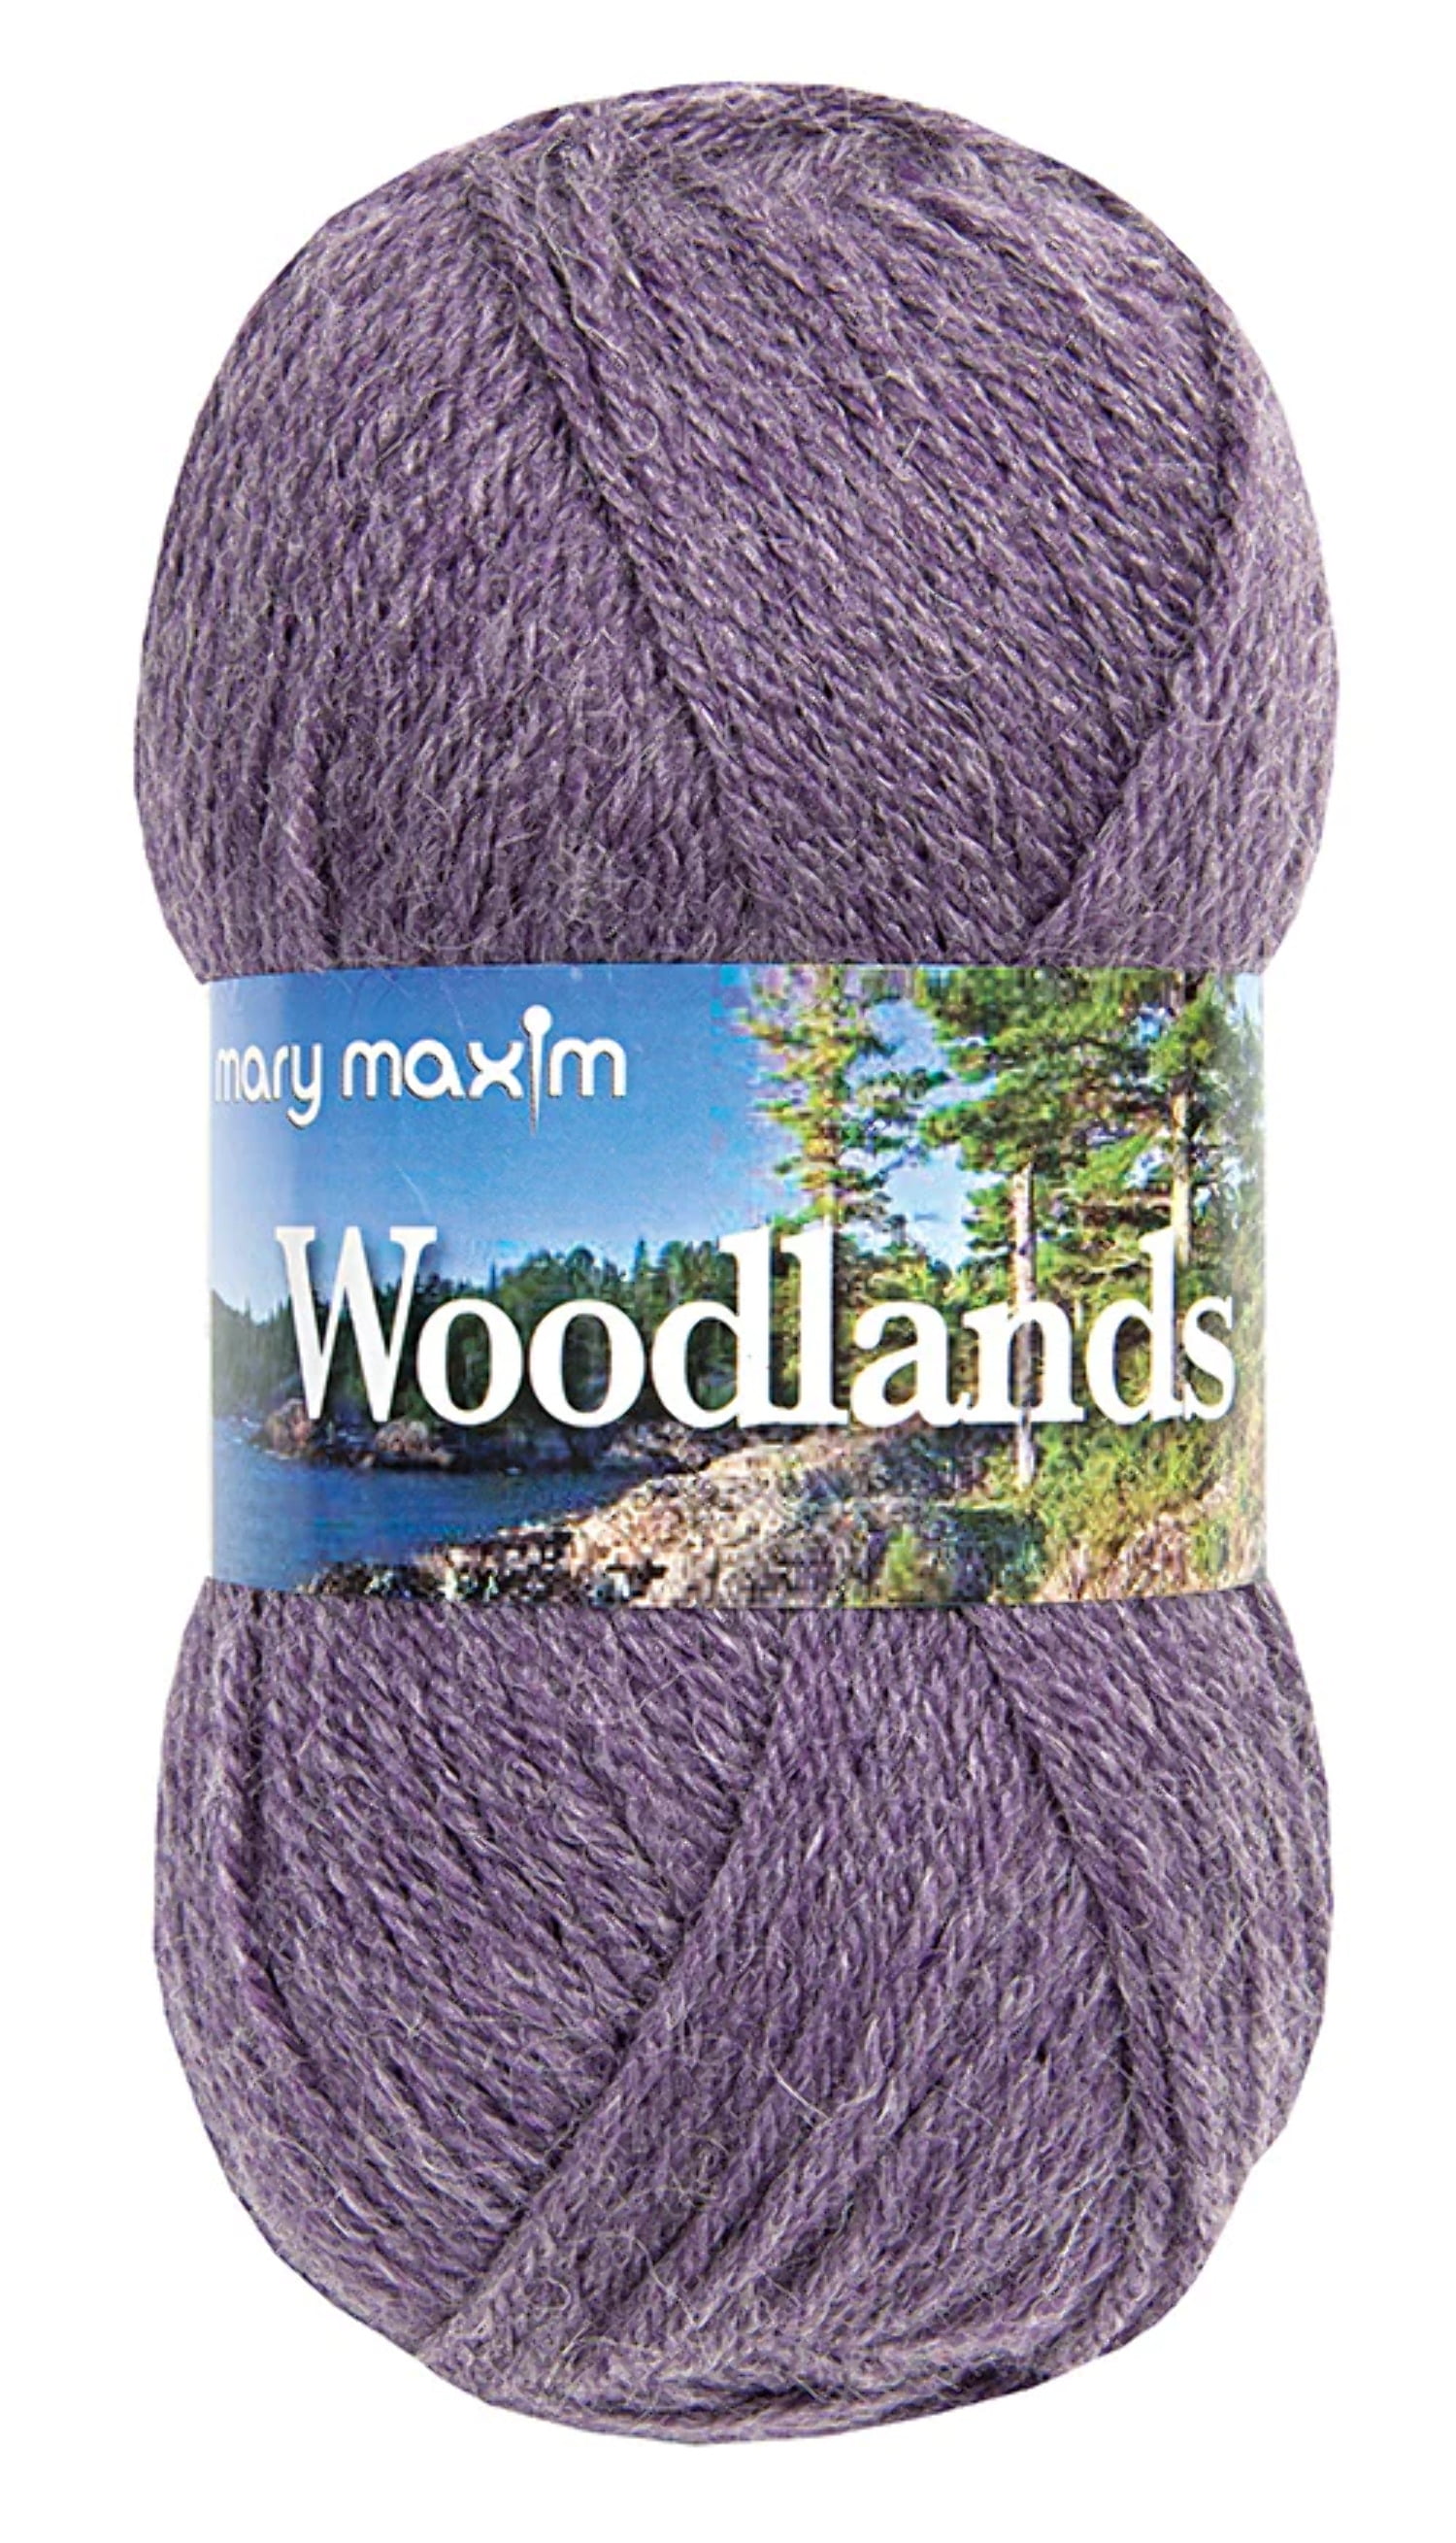 Medium/Worsted Weight Yarn – Mary Maxim